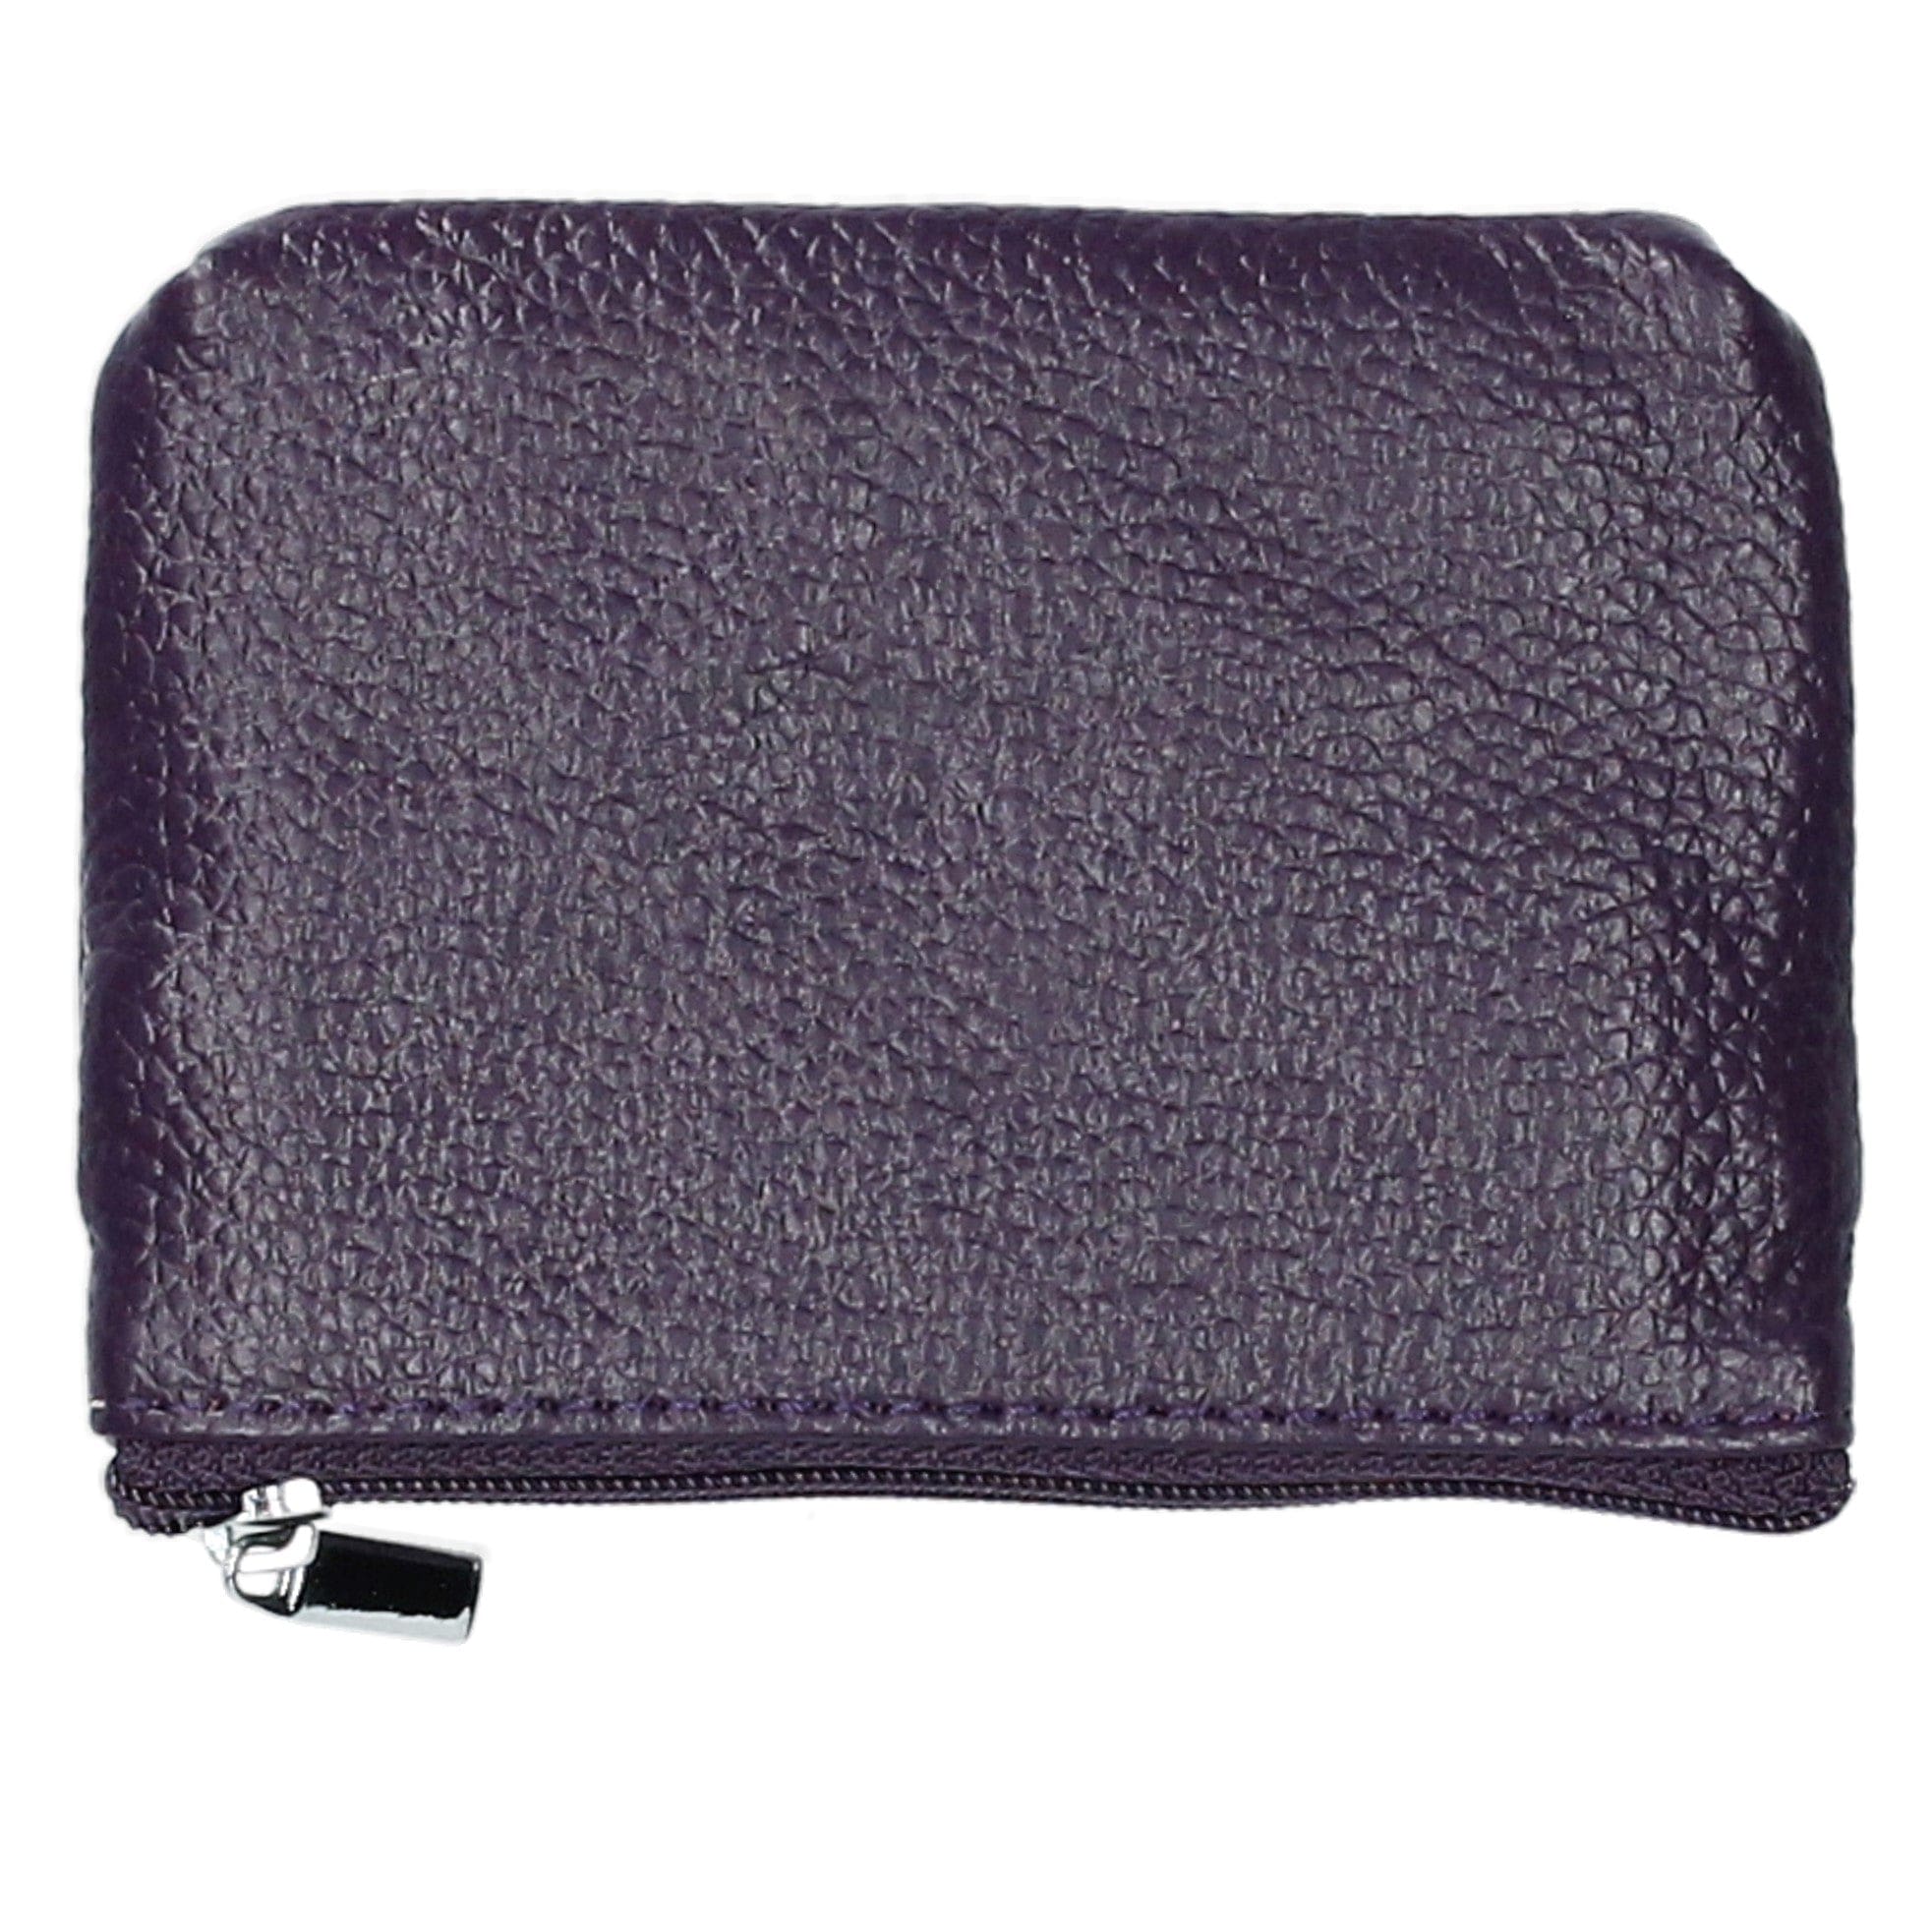 Arlette purse - Purple - Small leather goods